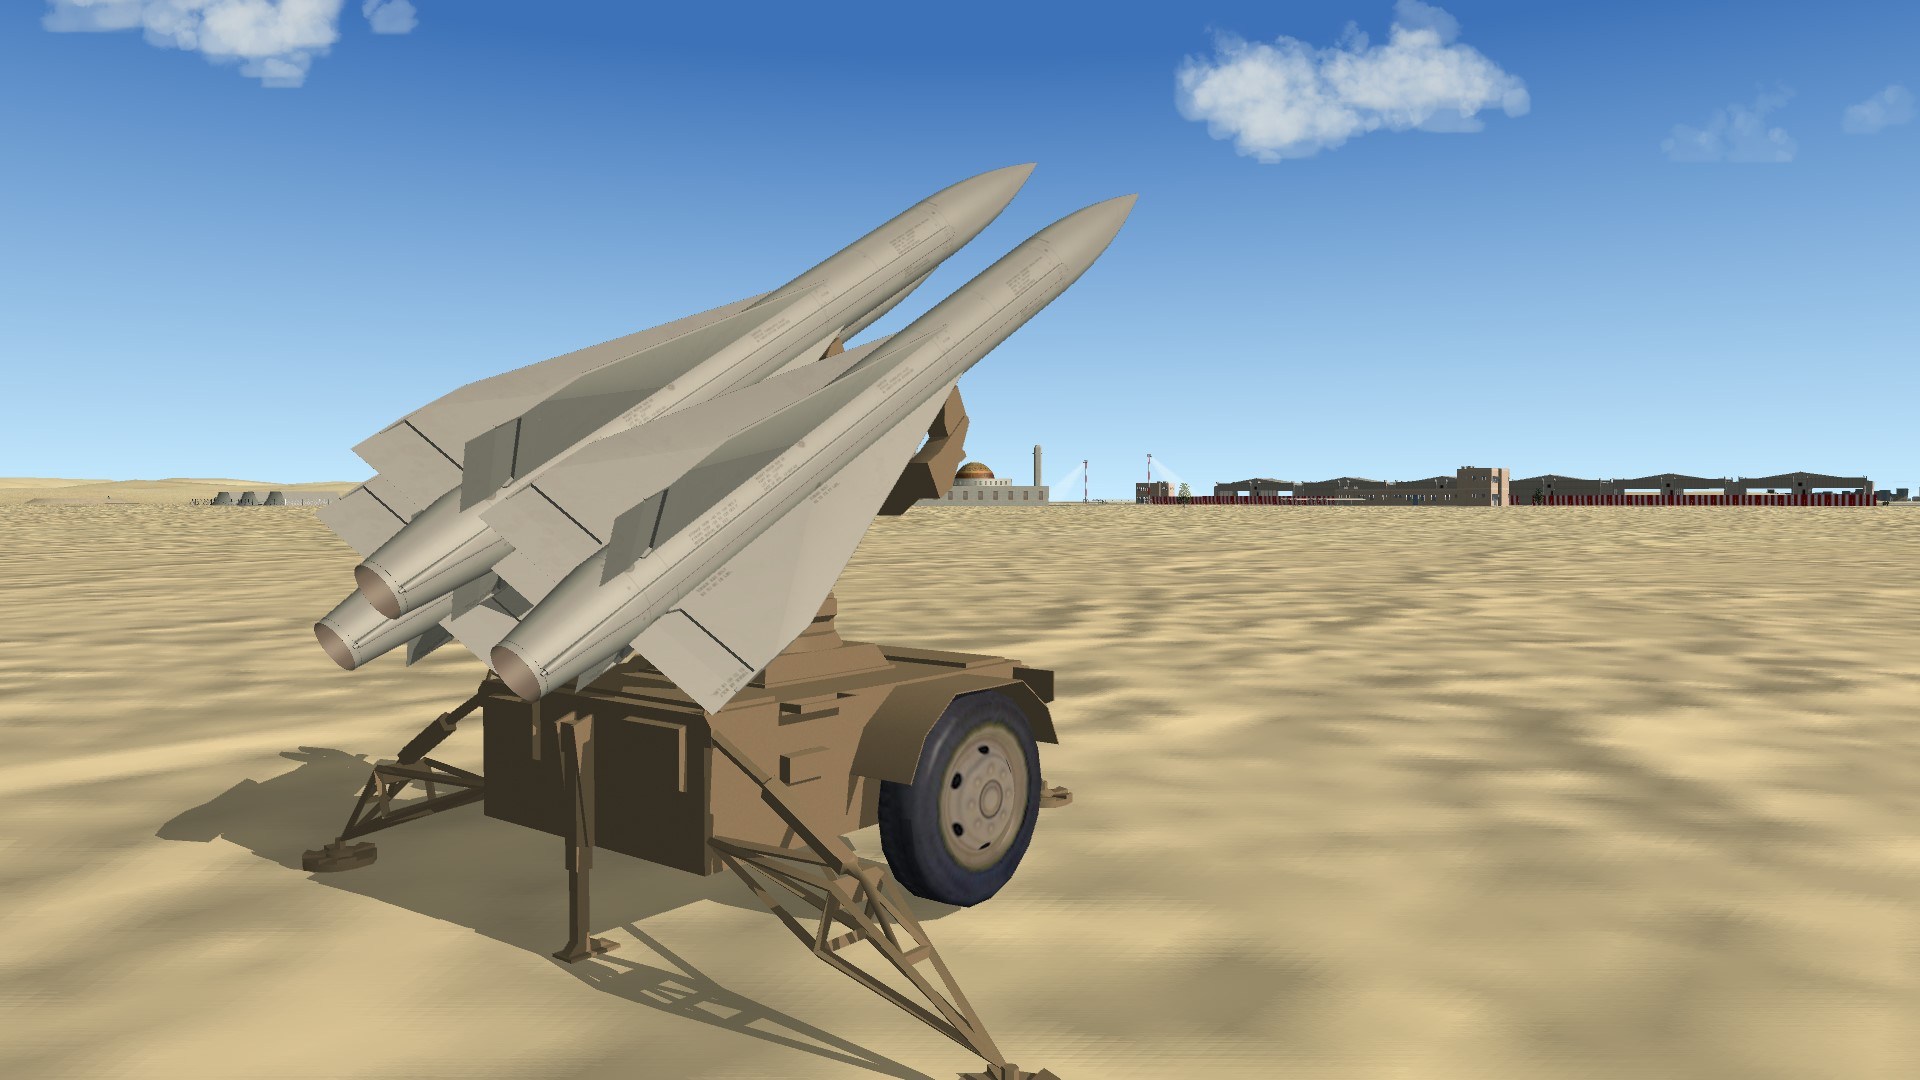 MIM-23 Hawk Missile System Unit